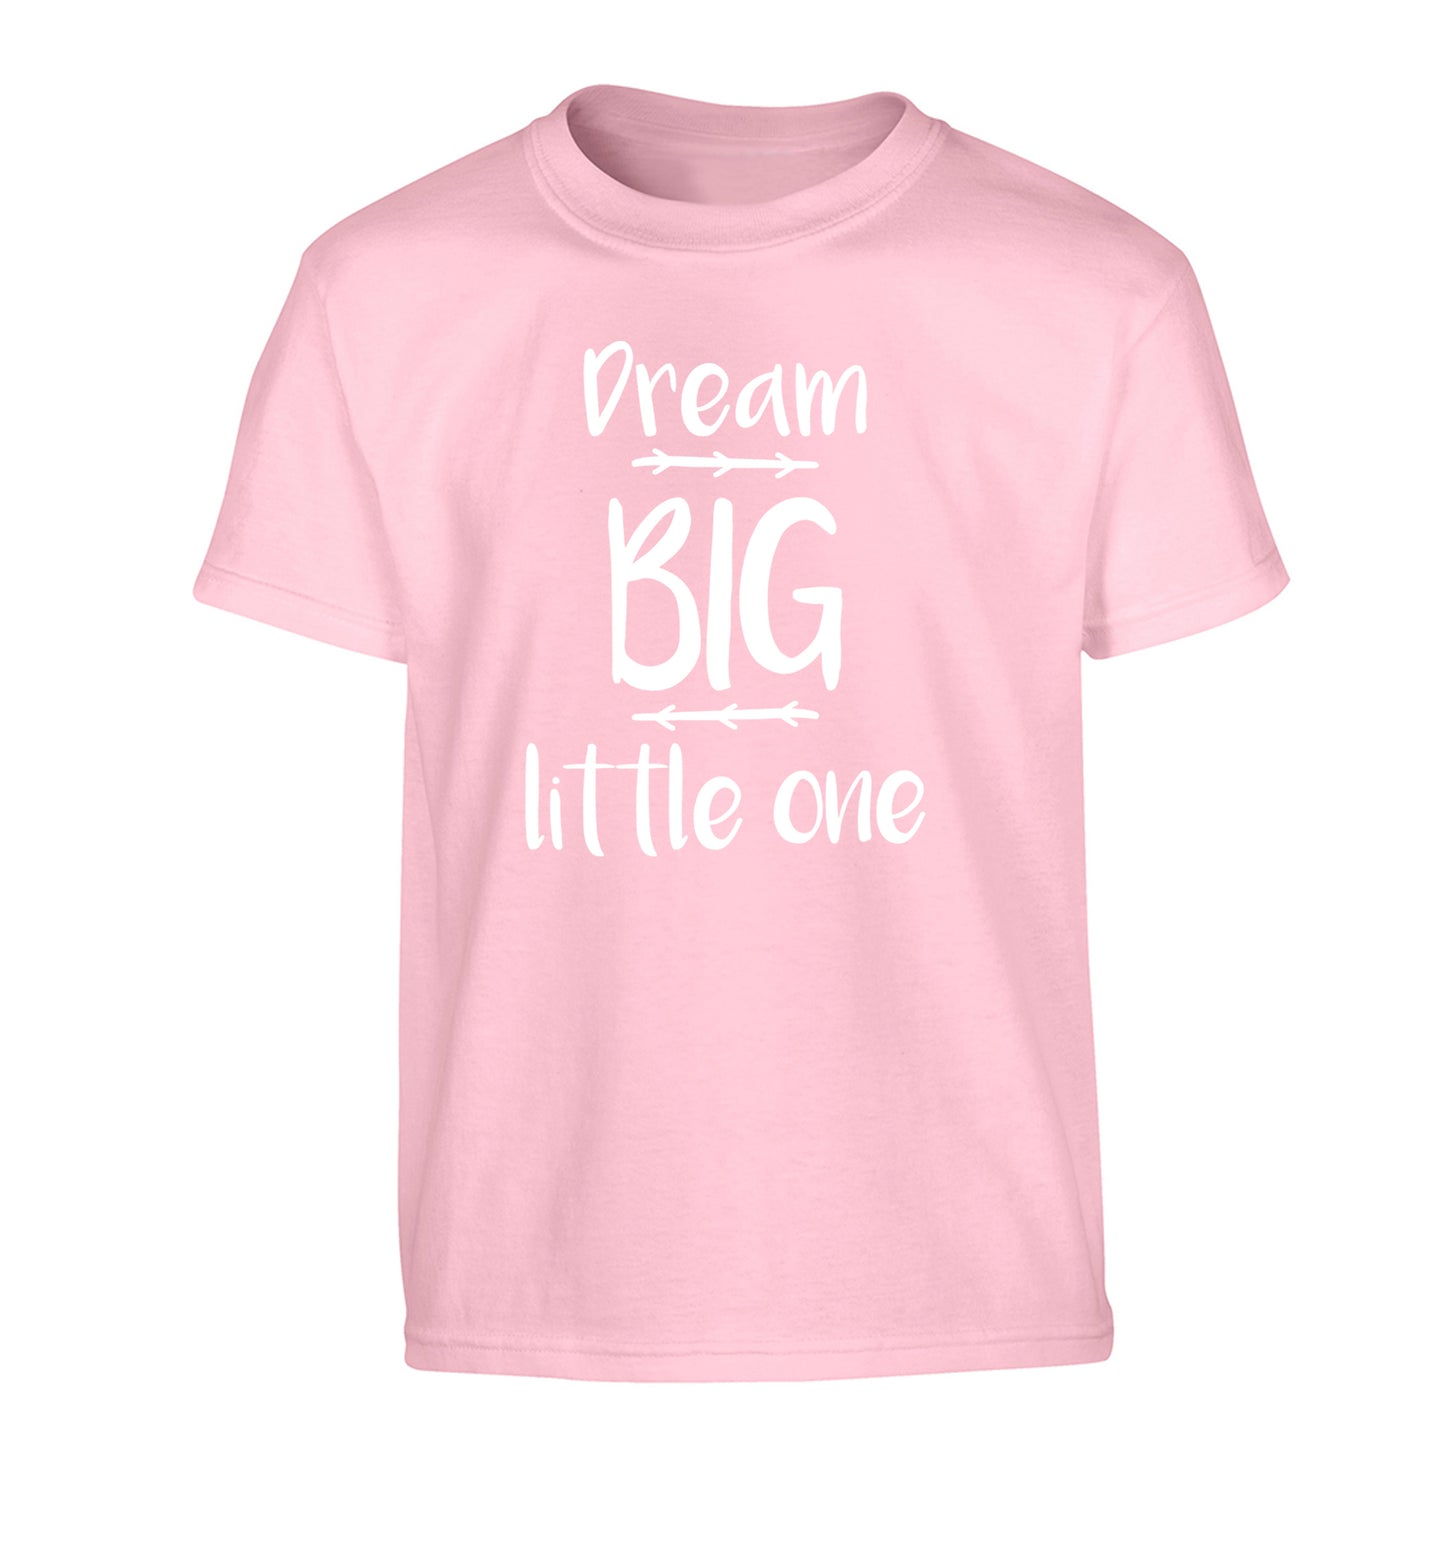 Dream big little one Children's light pink Tshirt 12-14 Years